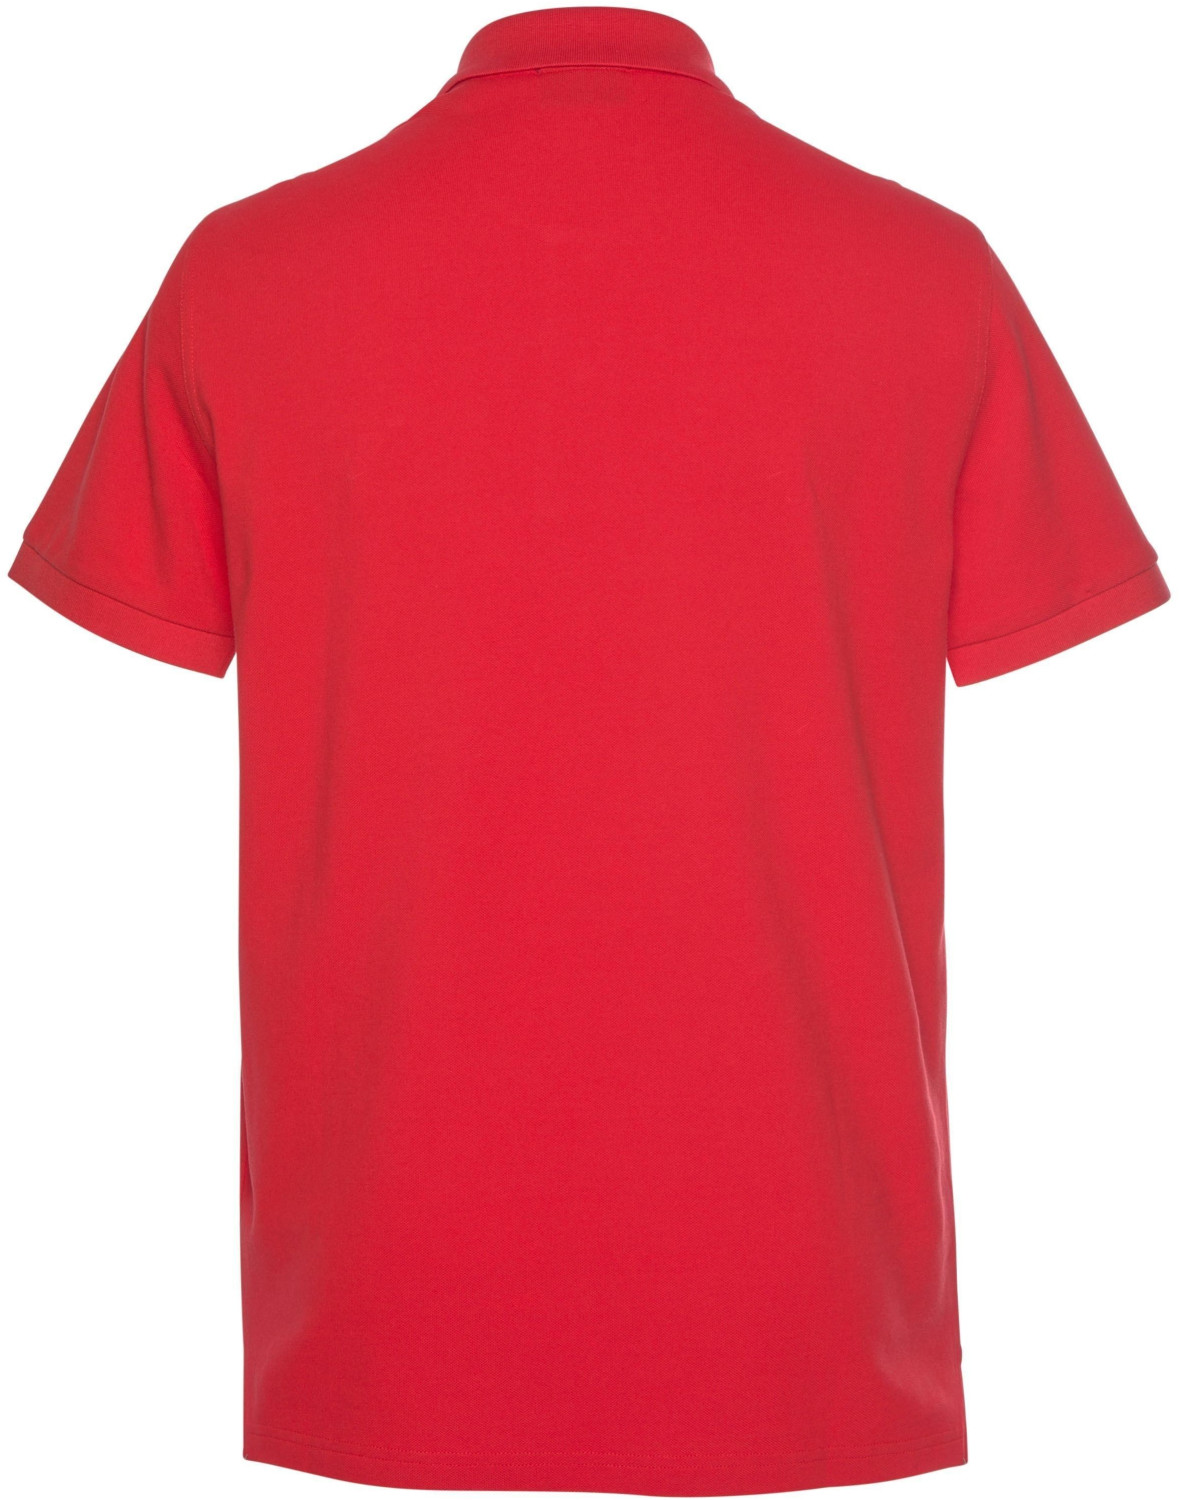 red Preisvergleich 51,95 € (2201) Polo bei GANT Bestseller Piqué ab bright Shirt |